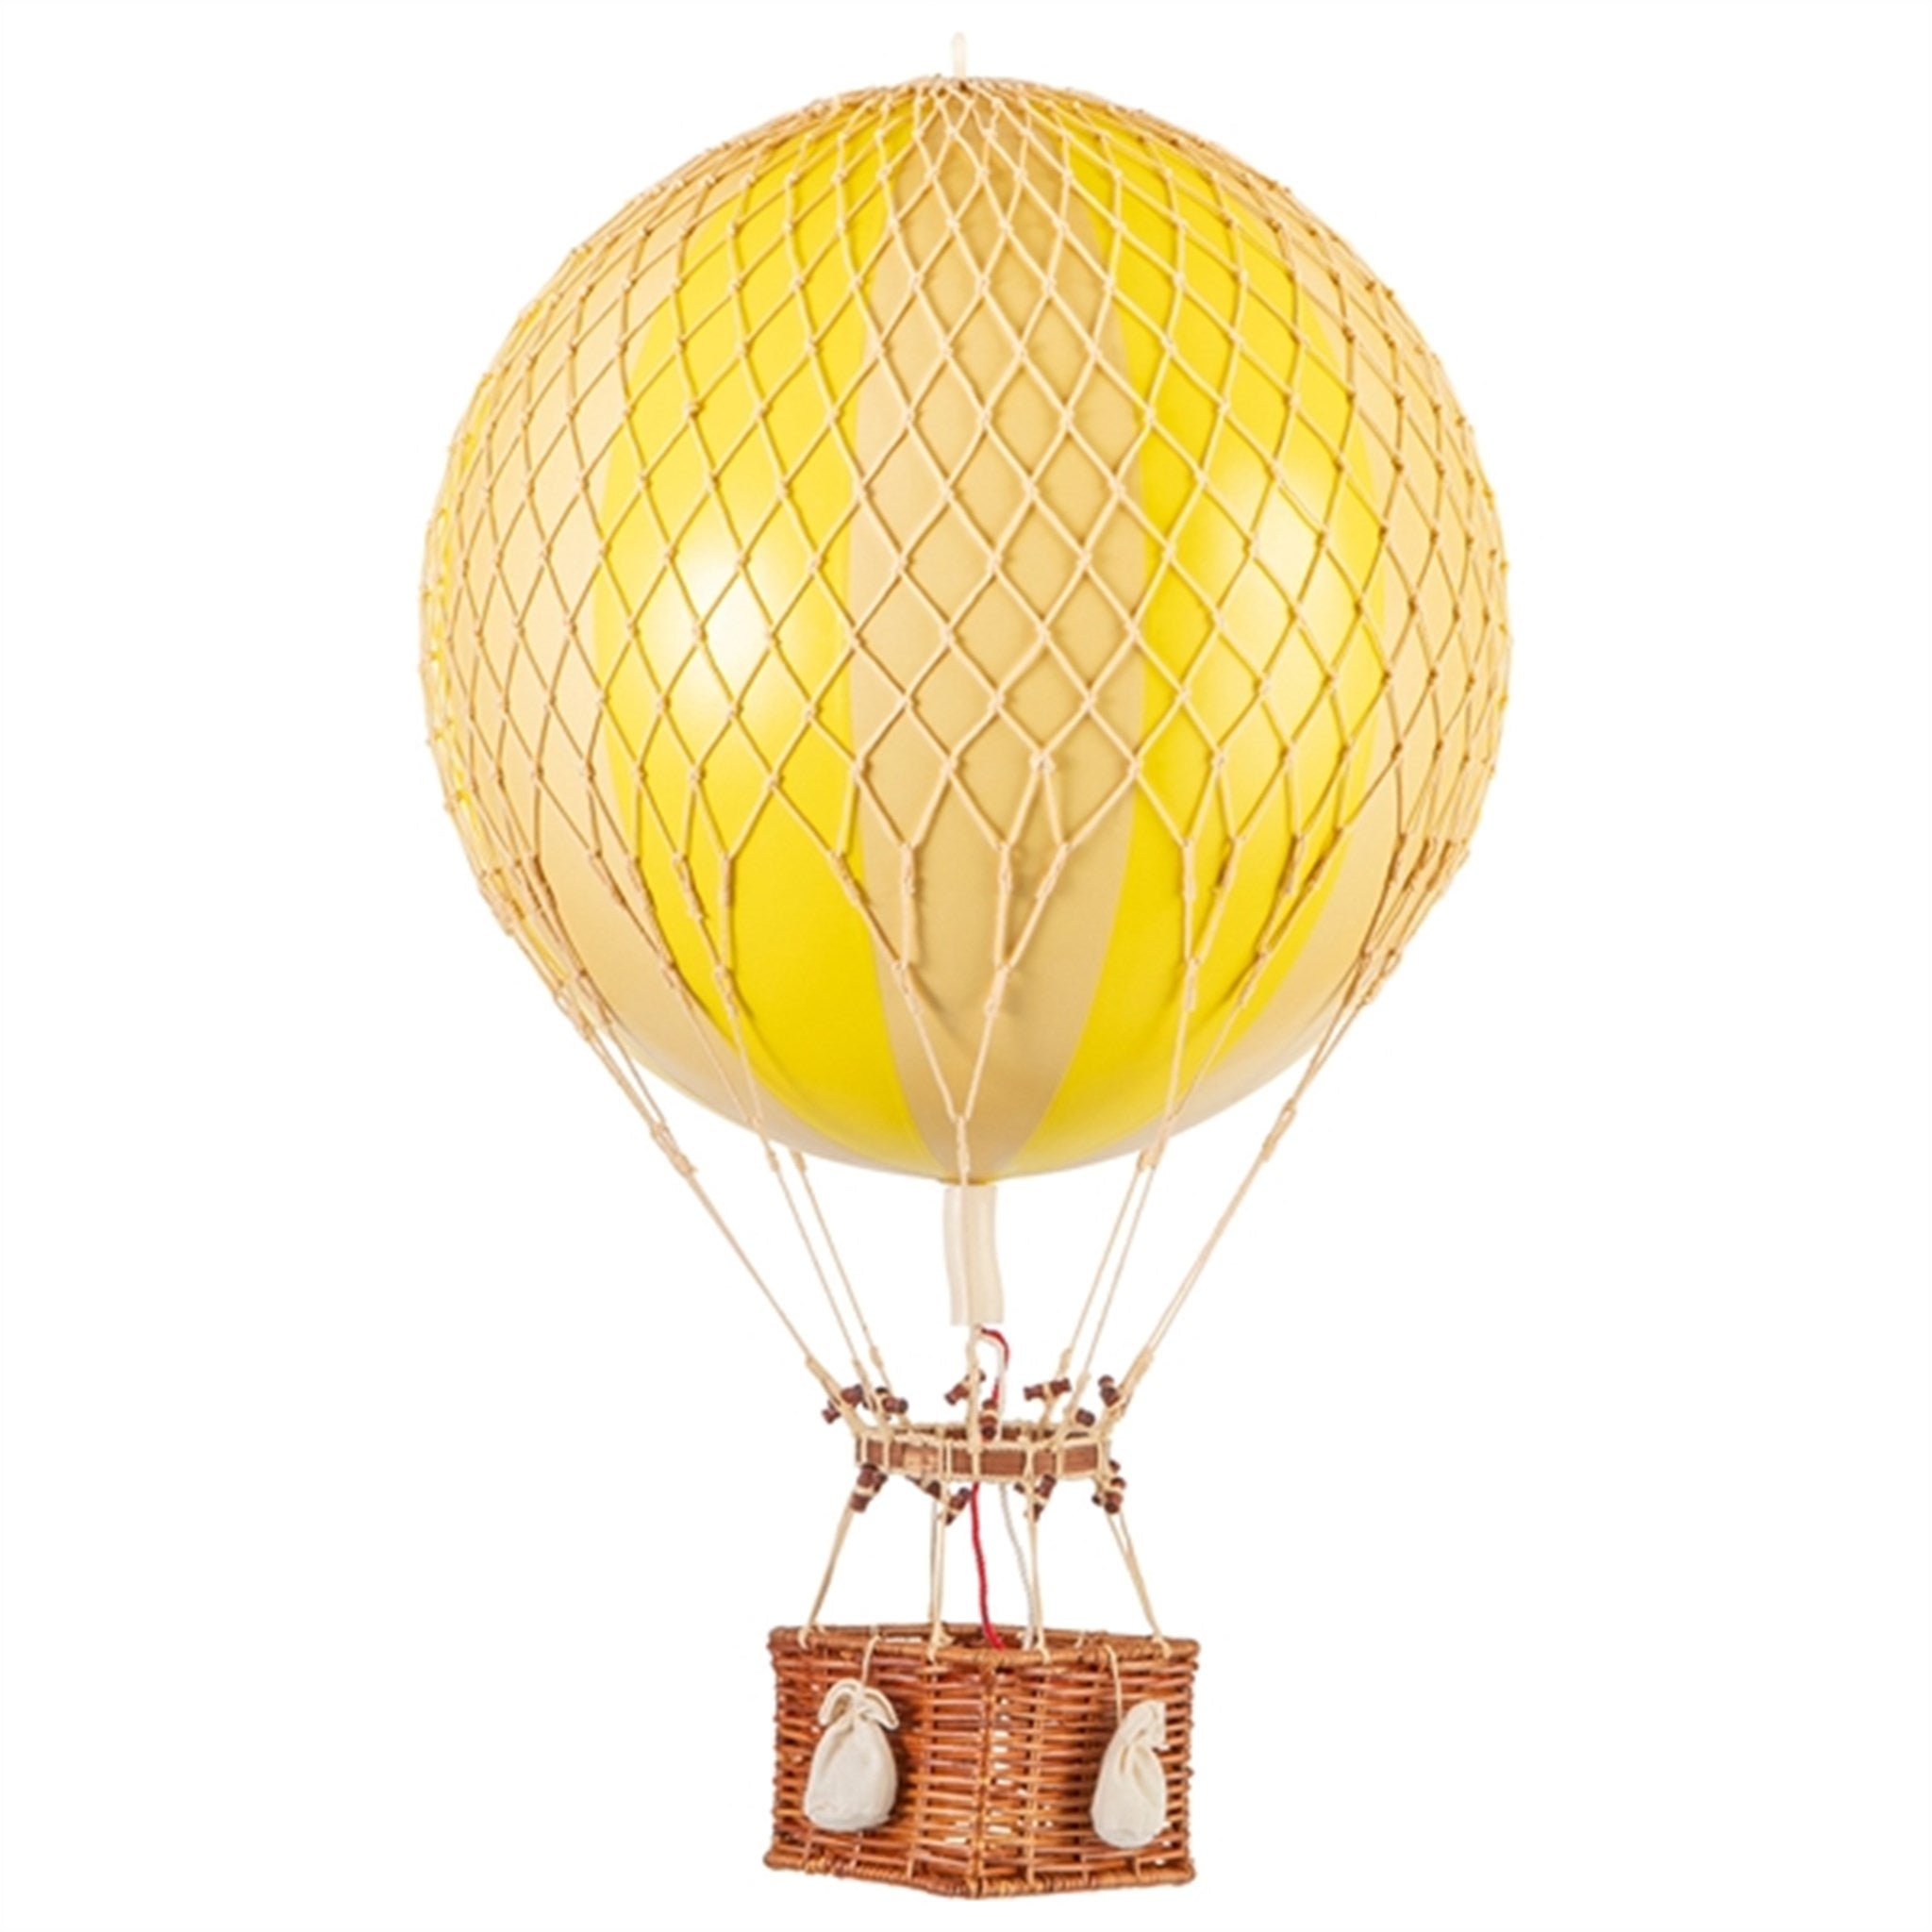 Authentic Models Luftballon Double Yellow 32 cm